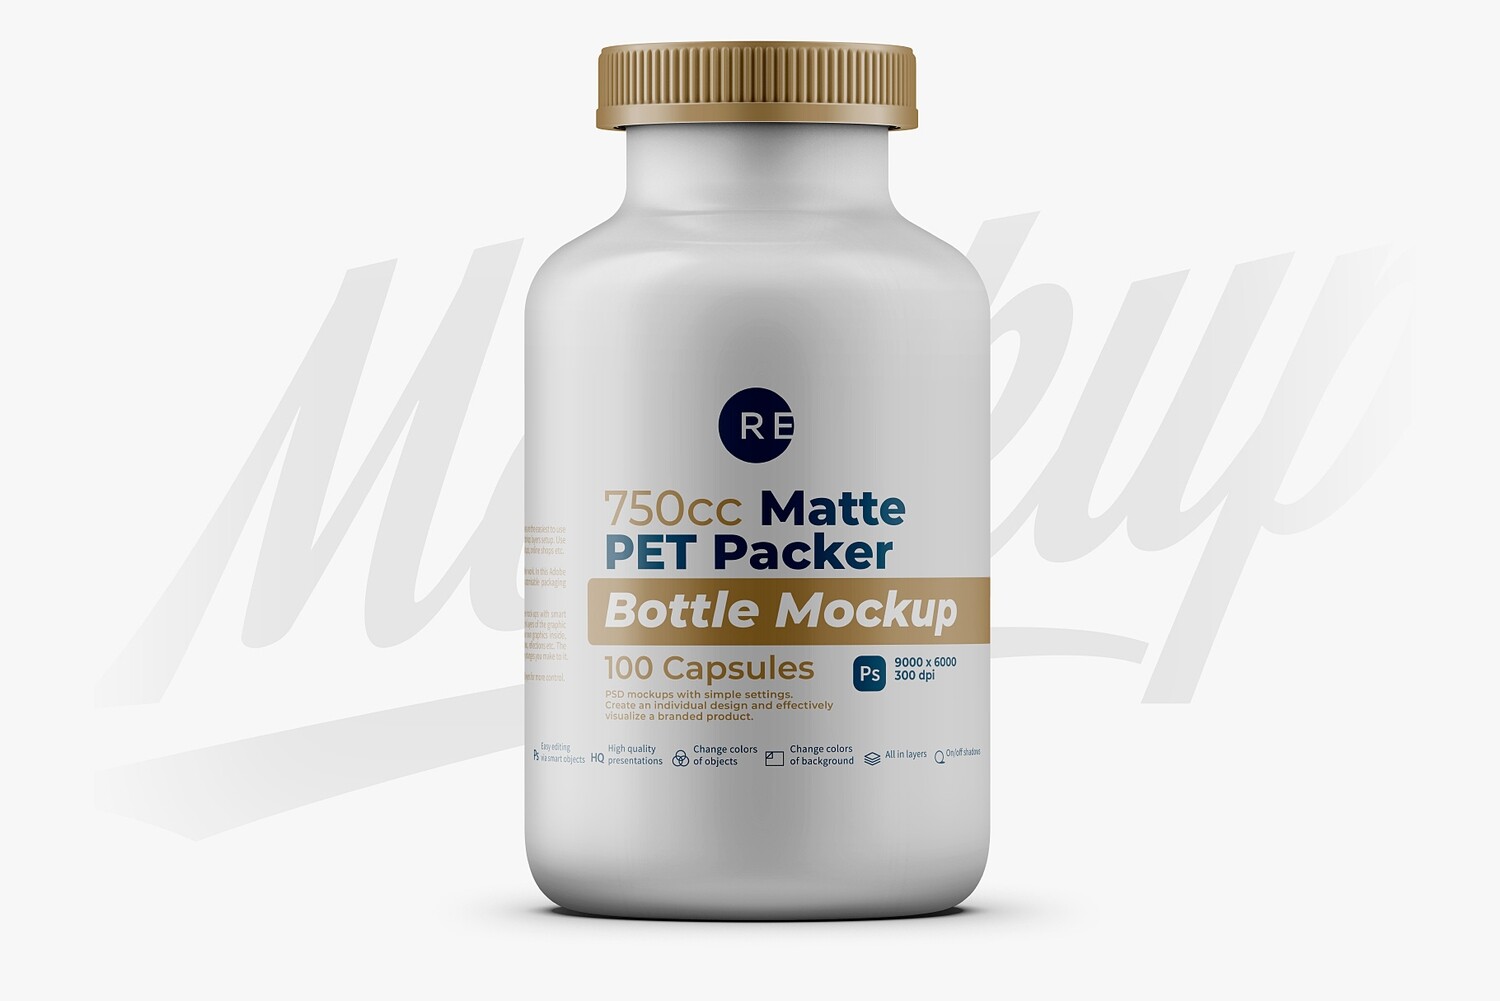 Matte Pills Bottle Mockup 750cc